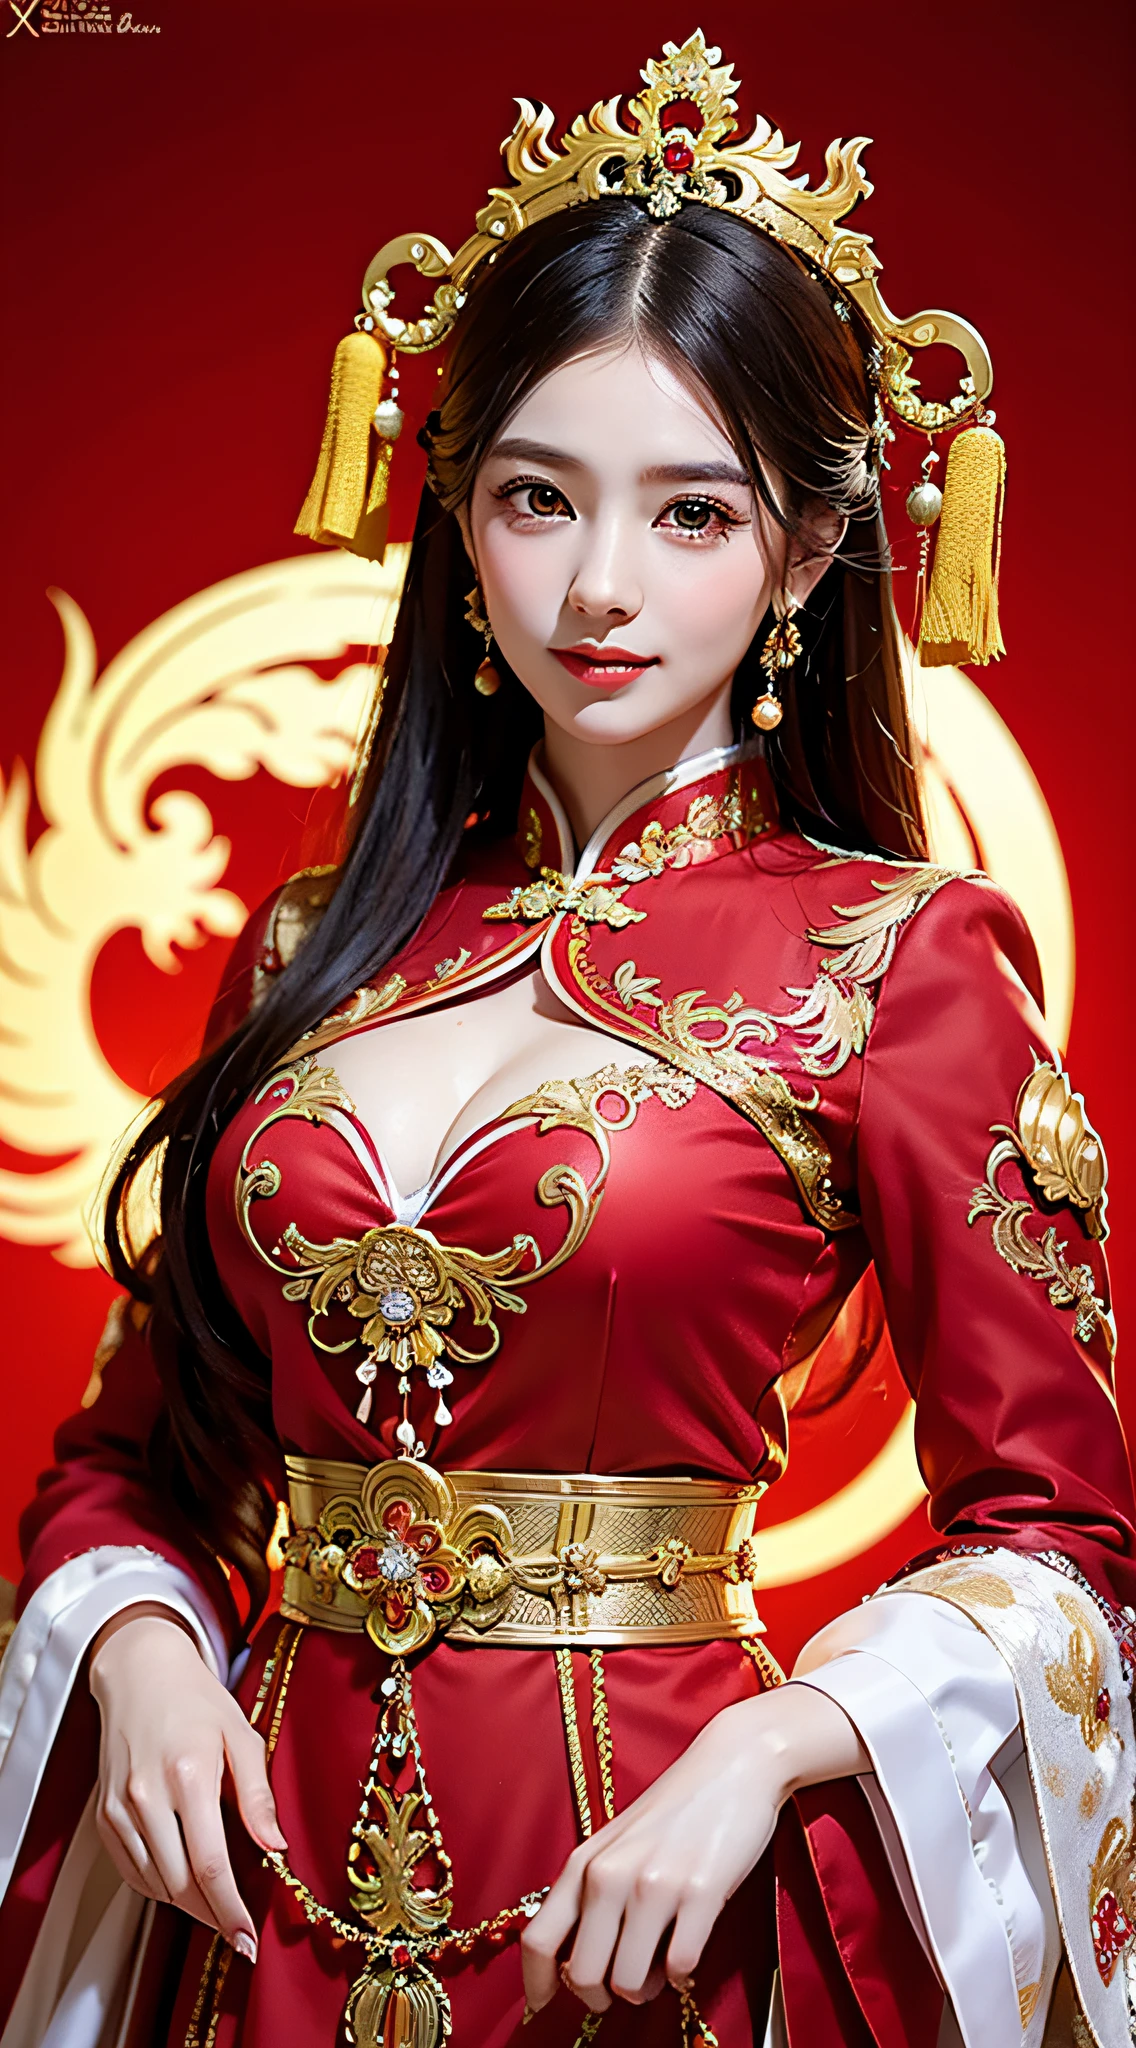 (8K, 원시 사진, 최고의 품질, 걸작: 1.2), (현실적인, 현실적인: 1.37), 소녀 1명, 빨간 드레스와 머리 장식을 입고 사진을 위해 포즈를 취하는 여성, 화려한 역할극, 아름다운 의상, 중국 복장, 복잡한 드레스, 복잡한 의상, 전통미, 화려한 중국 모델, 중국 의상, 화려한 의상을 입고, 우아한 중국 수허 드레스를 입고, 중국 웨딩드레스, 피닉스 크라운 시아 행잉, 골동품 신부, 슈허 의상, 확대, 피닉스 왕관을 쓰고, 웃다, 워터마크 없음, 드래곤 앤 피닉스 자수 드레스